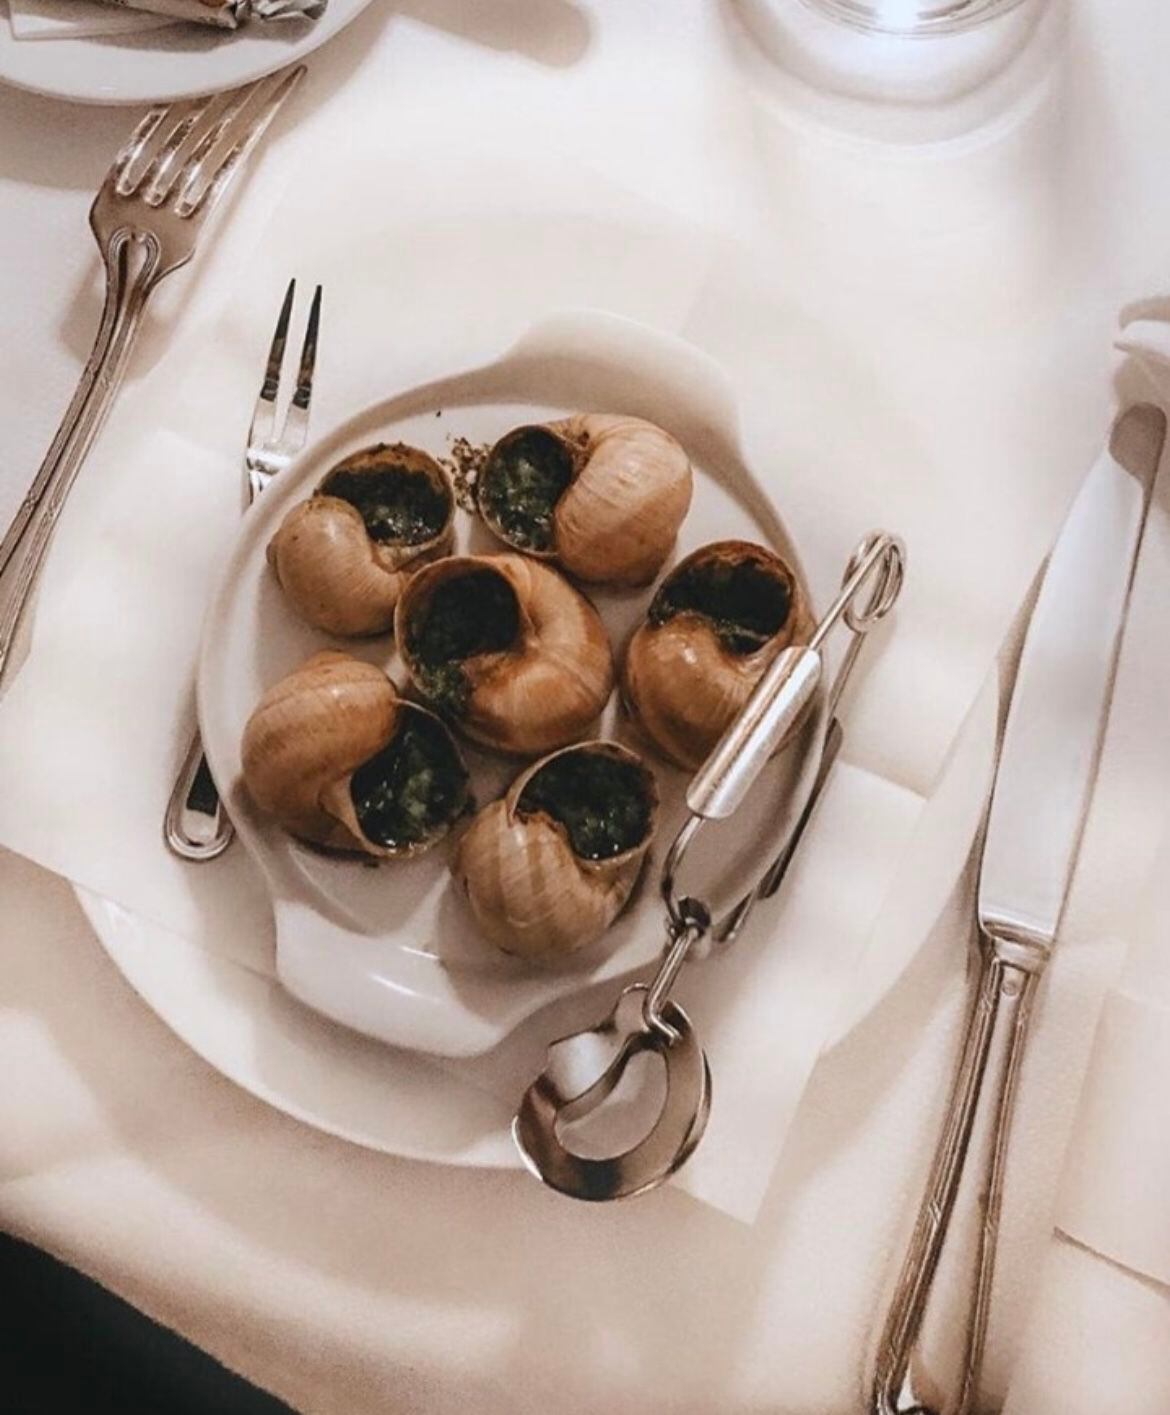 Los restaurantes del hotel Barrière Le Fouquet’s se especializan en comida francesa. (Foto: Instagram / @fouquets.paris)